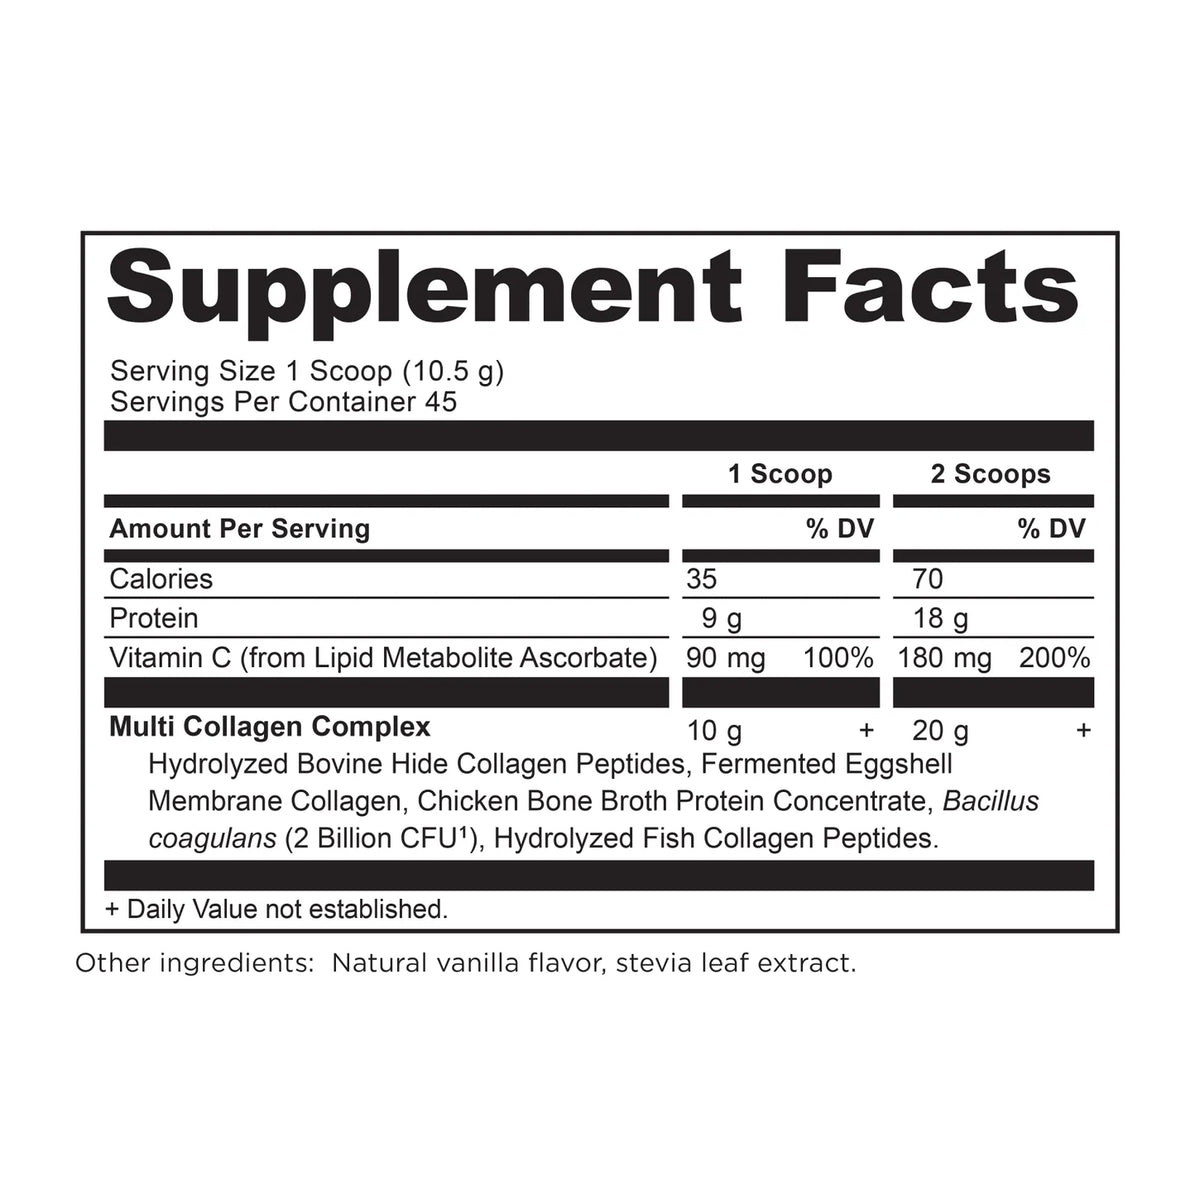 Multi Collagen Protein 45 Serving Ancient Nutrition - Nutrigeek